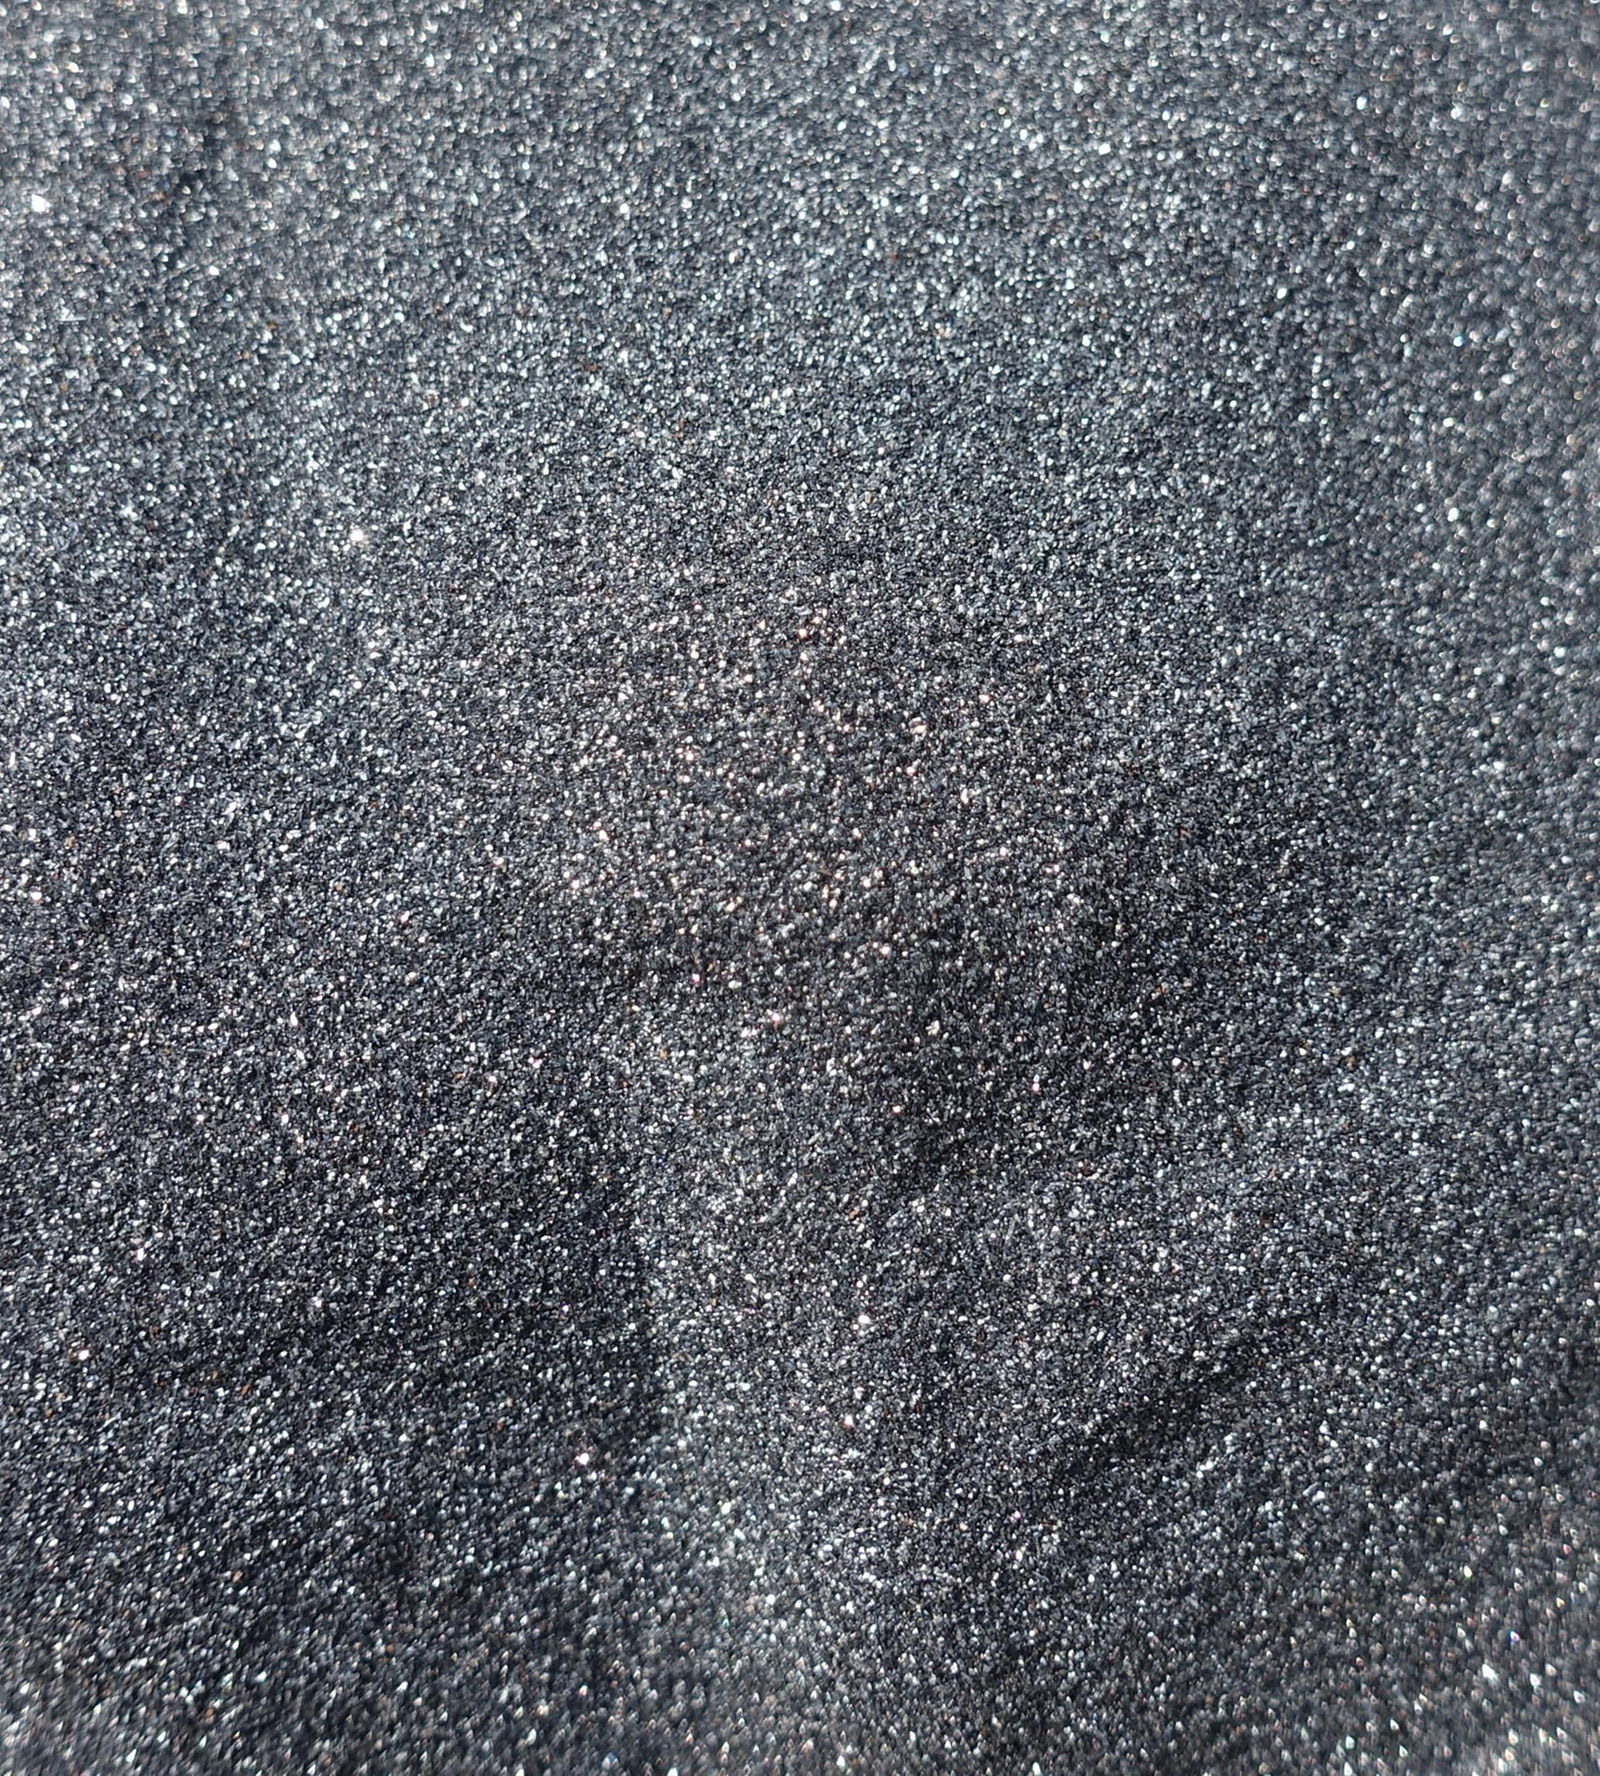 Black silicon cargbide 1